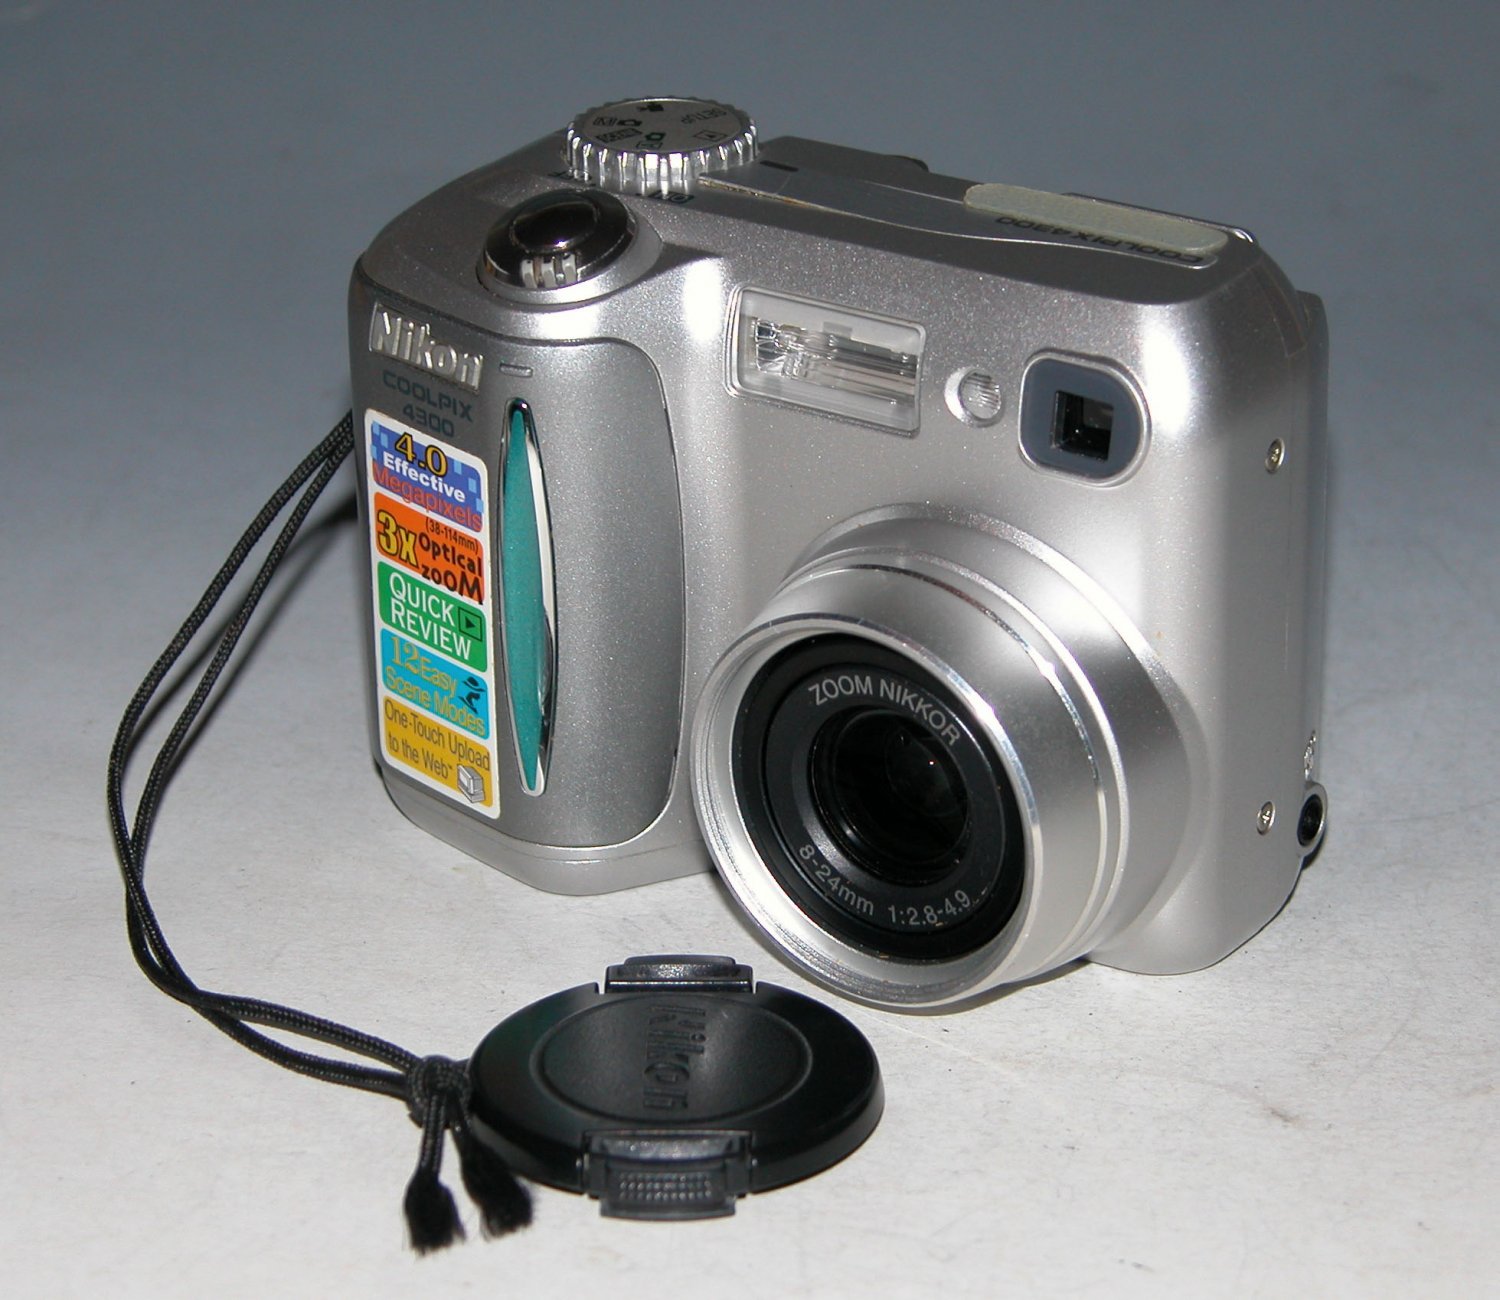 Nikon COOLPIX 4300 4.0MP Digital Camera - Silver #6965